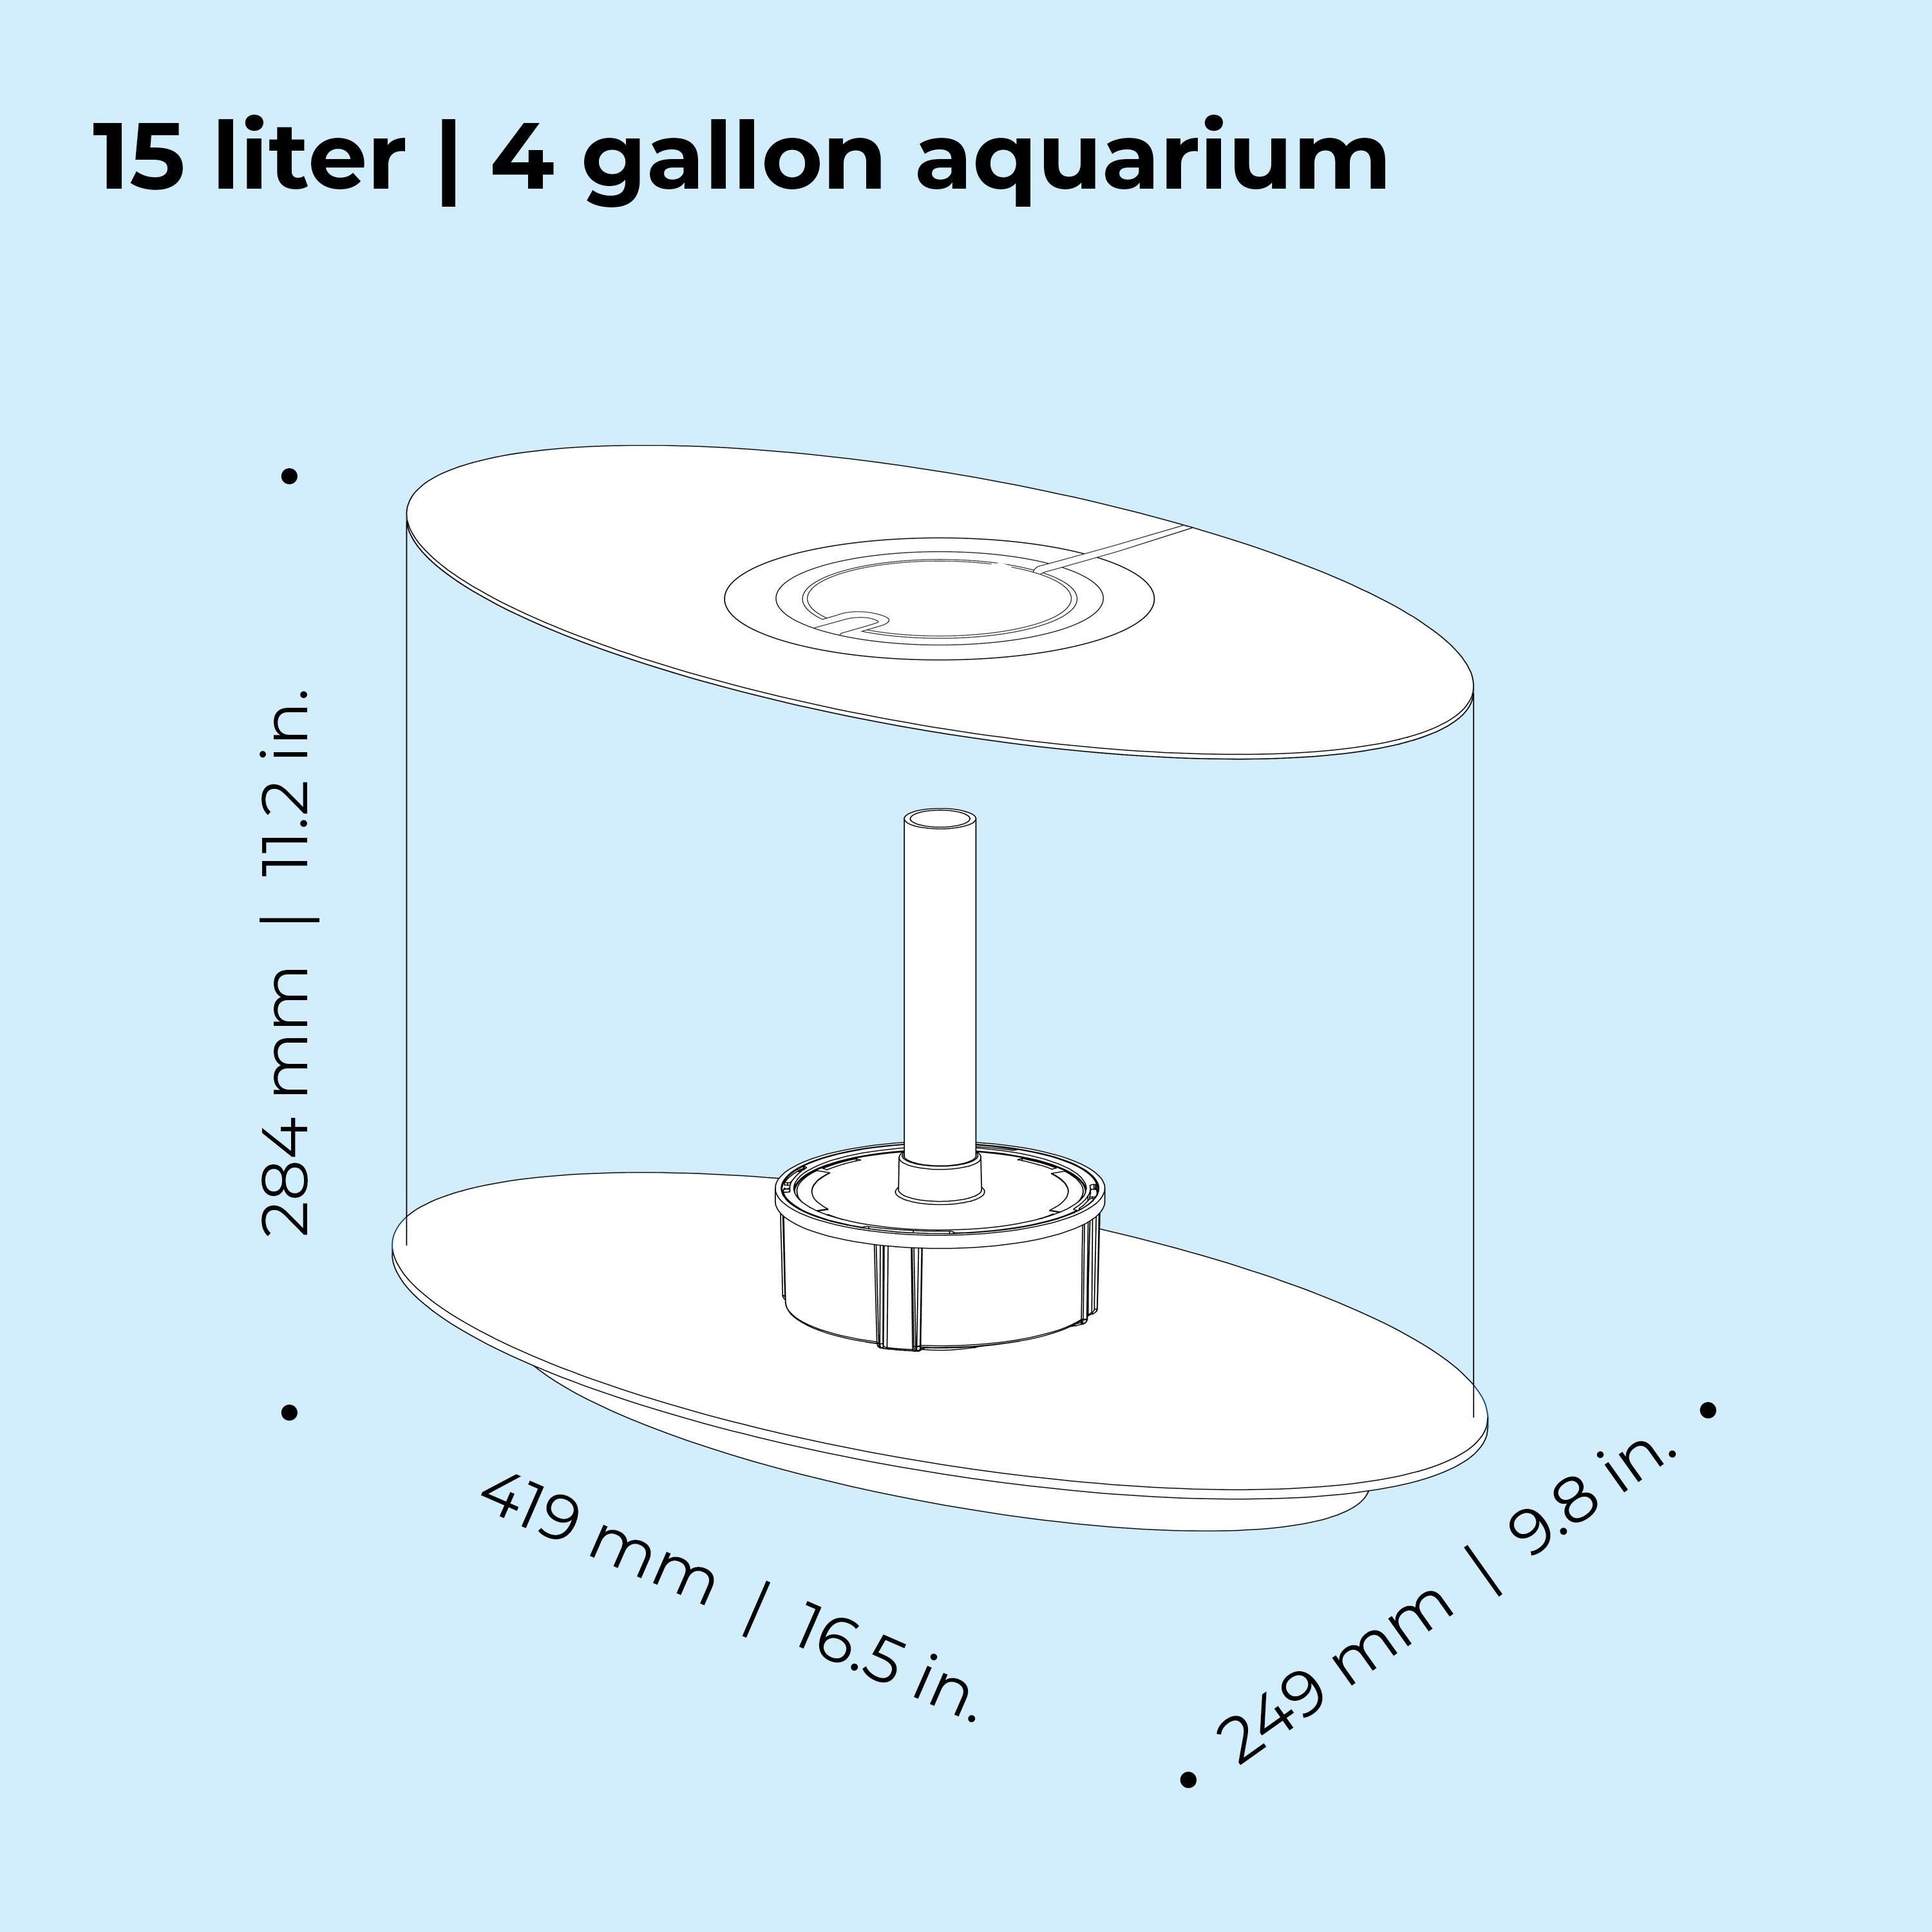 LOOP 15 Aquarium with Standard Light - 4 gallon, 15 liter dimension chart